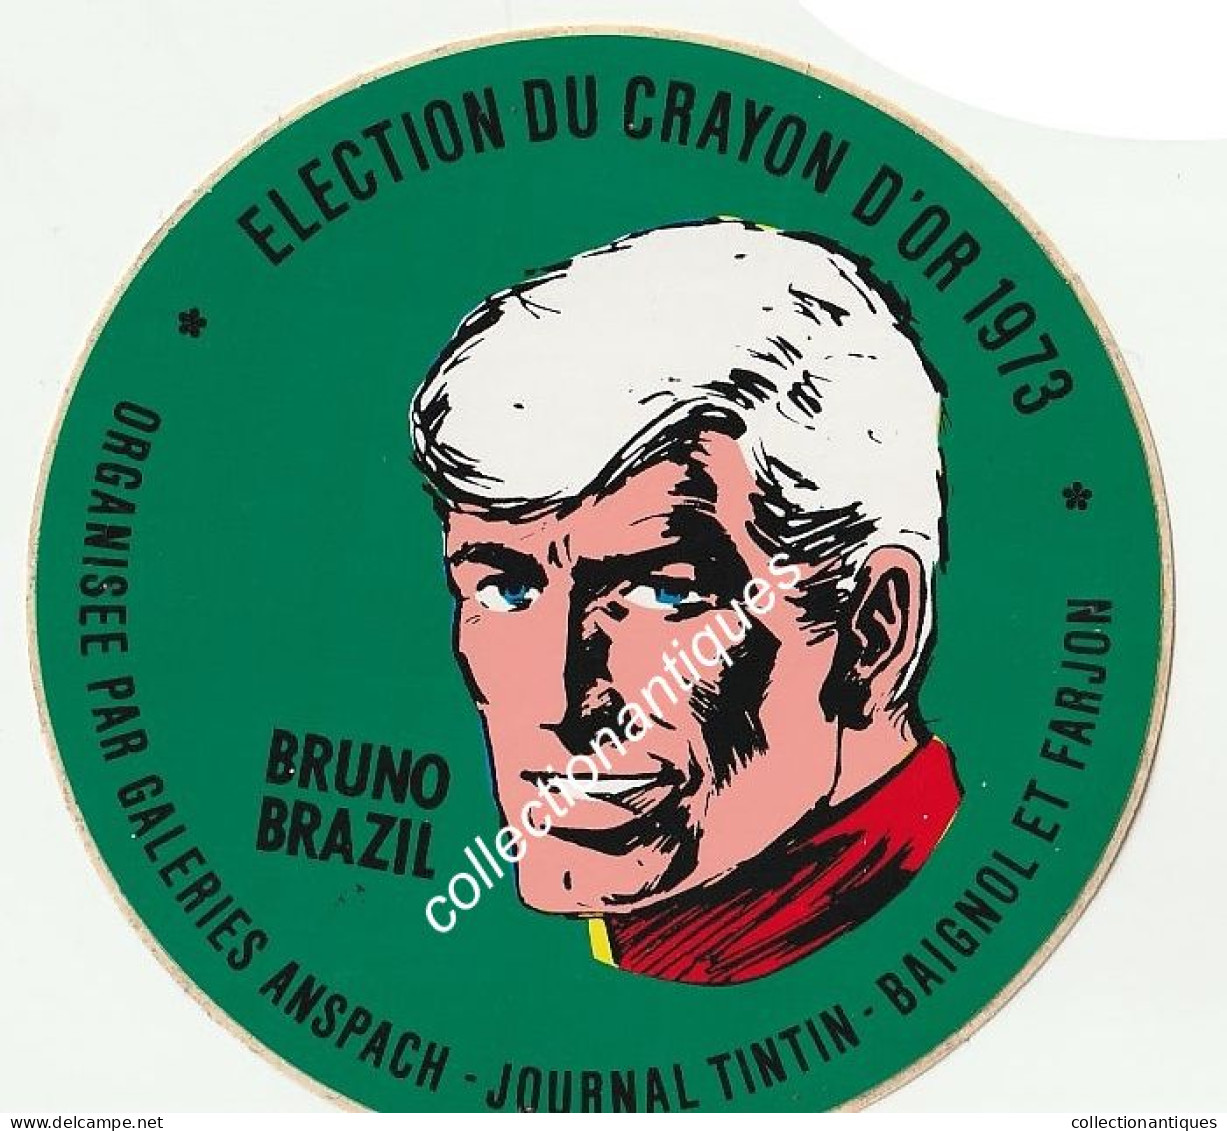 Bruno Brazil RARE Sticker Autocollant Election Du Crayon D'Or 1973 Galeries Anspach Journal Tintin Baignol Et Farjon - Aufkleber